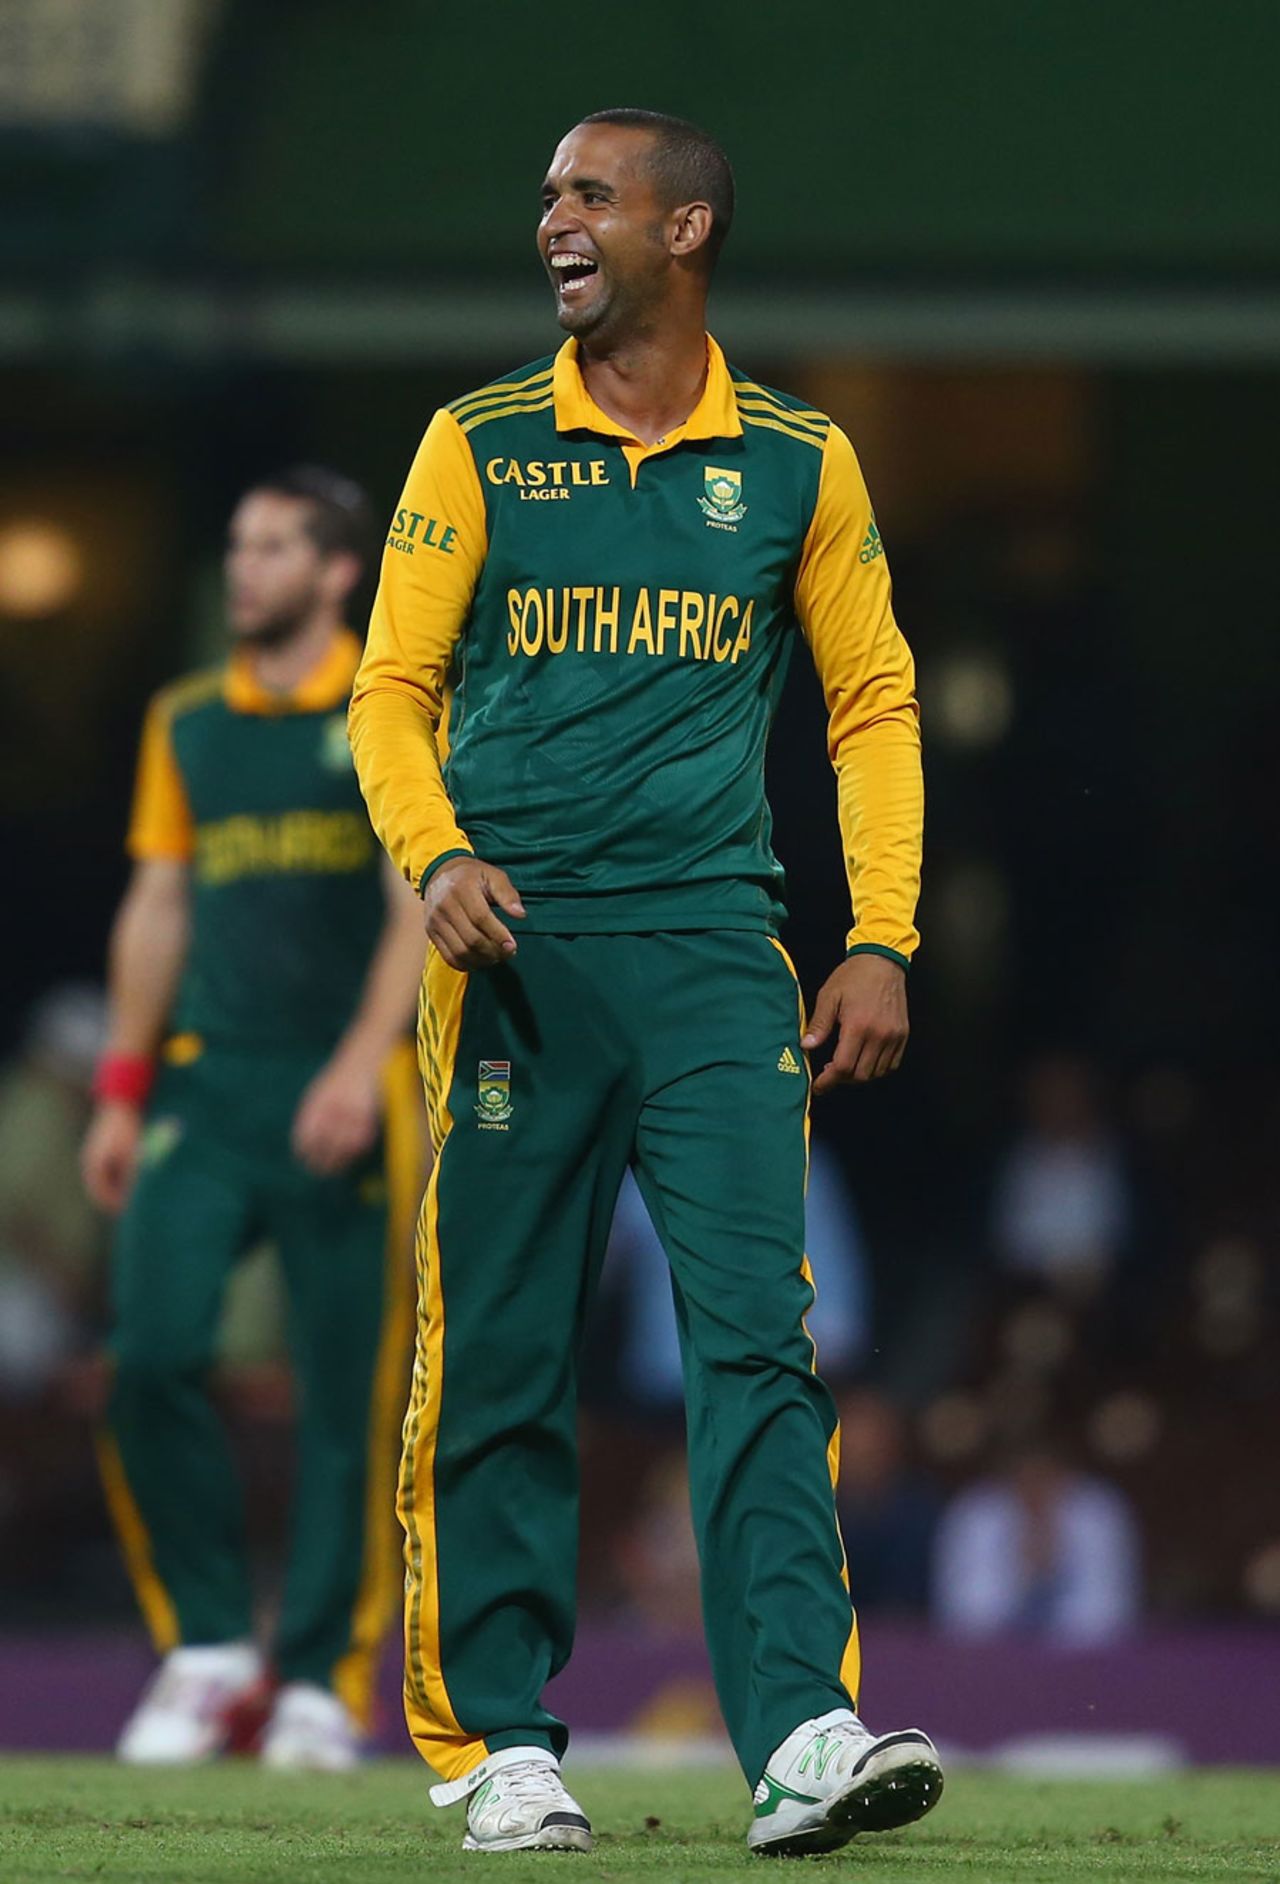 Robin Peterson picked up four wickets, Australia v South Africa, 5th ODI, Sydney, November 23, 2014